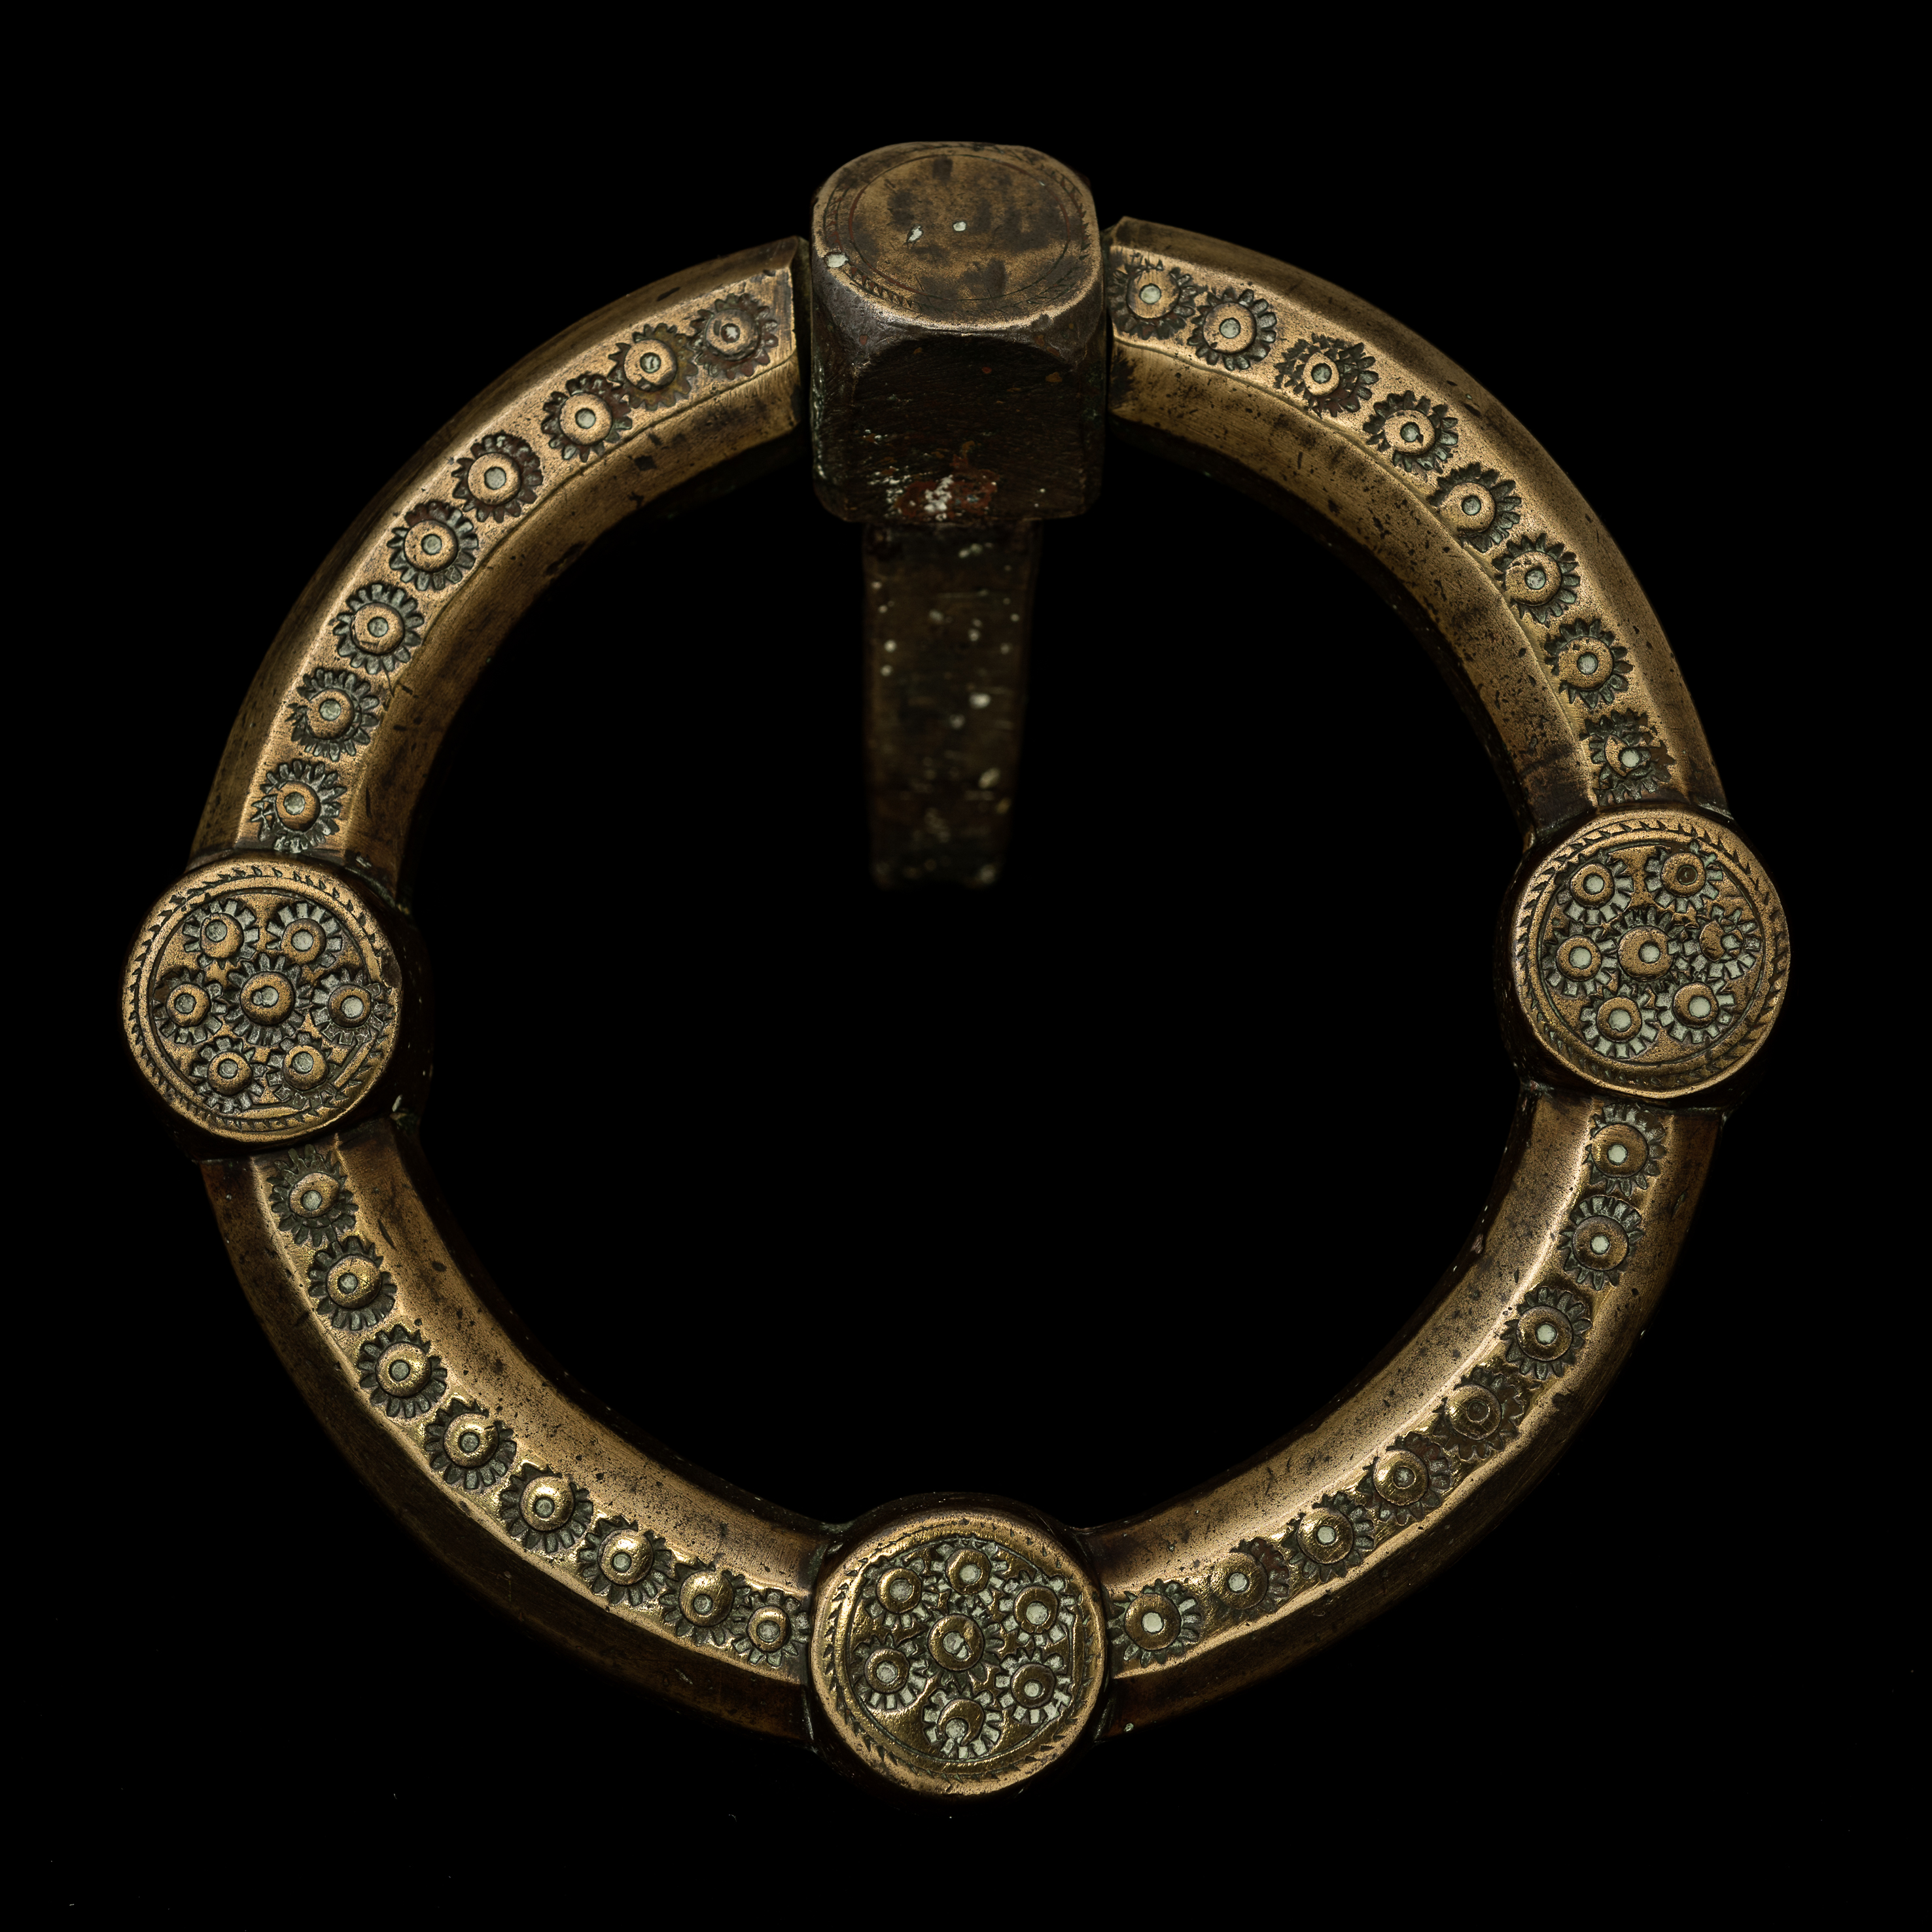 Þrasi's ring at Skógar Museum